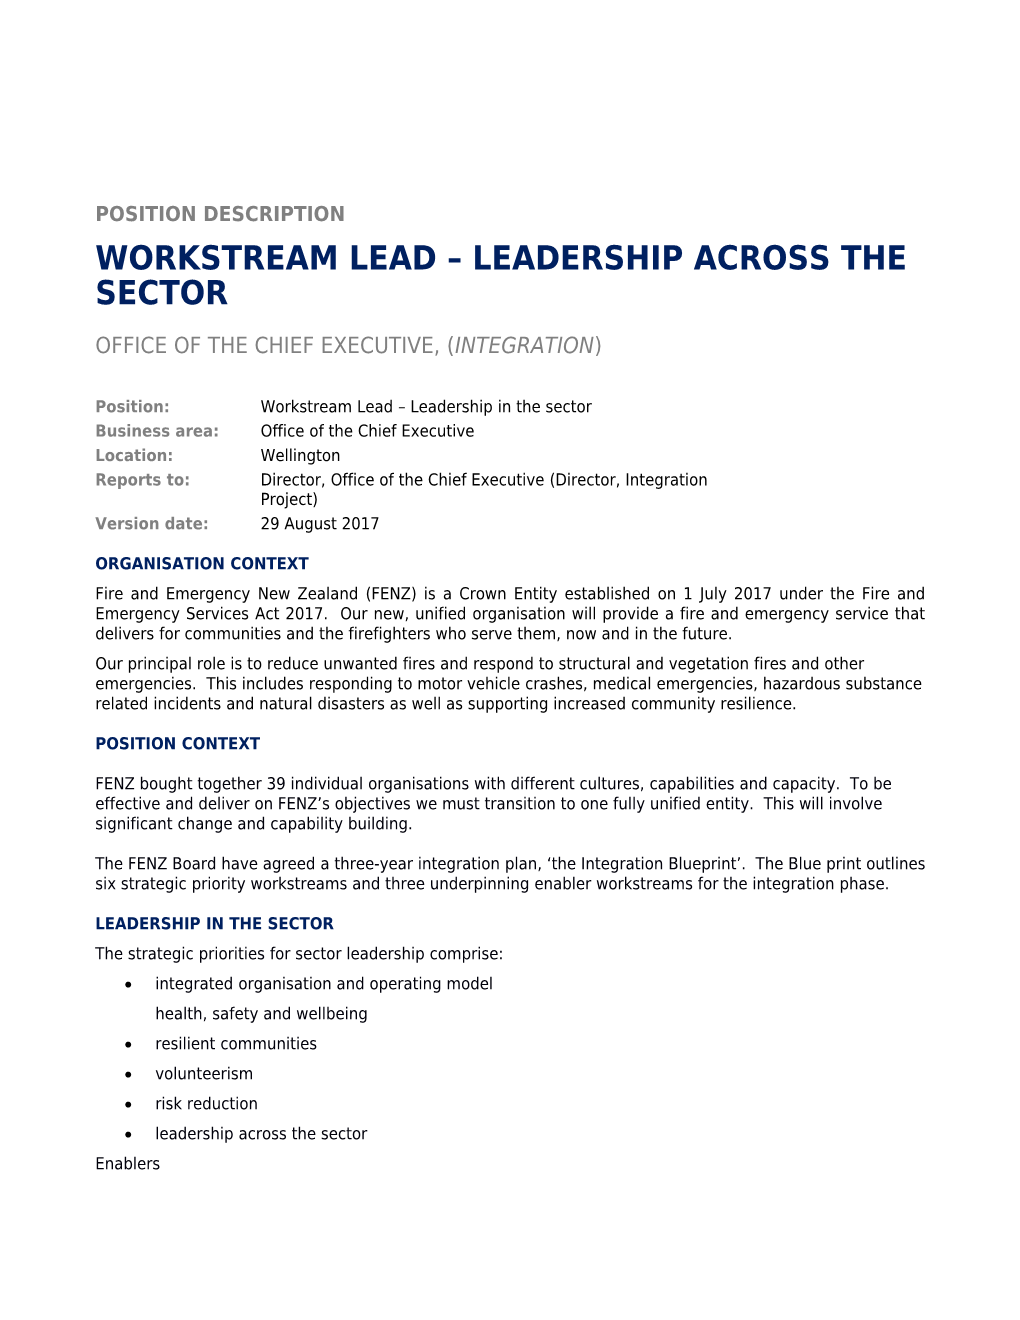 Workstream Lead Leadership ACROSS the Sector